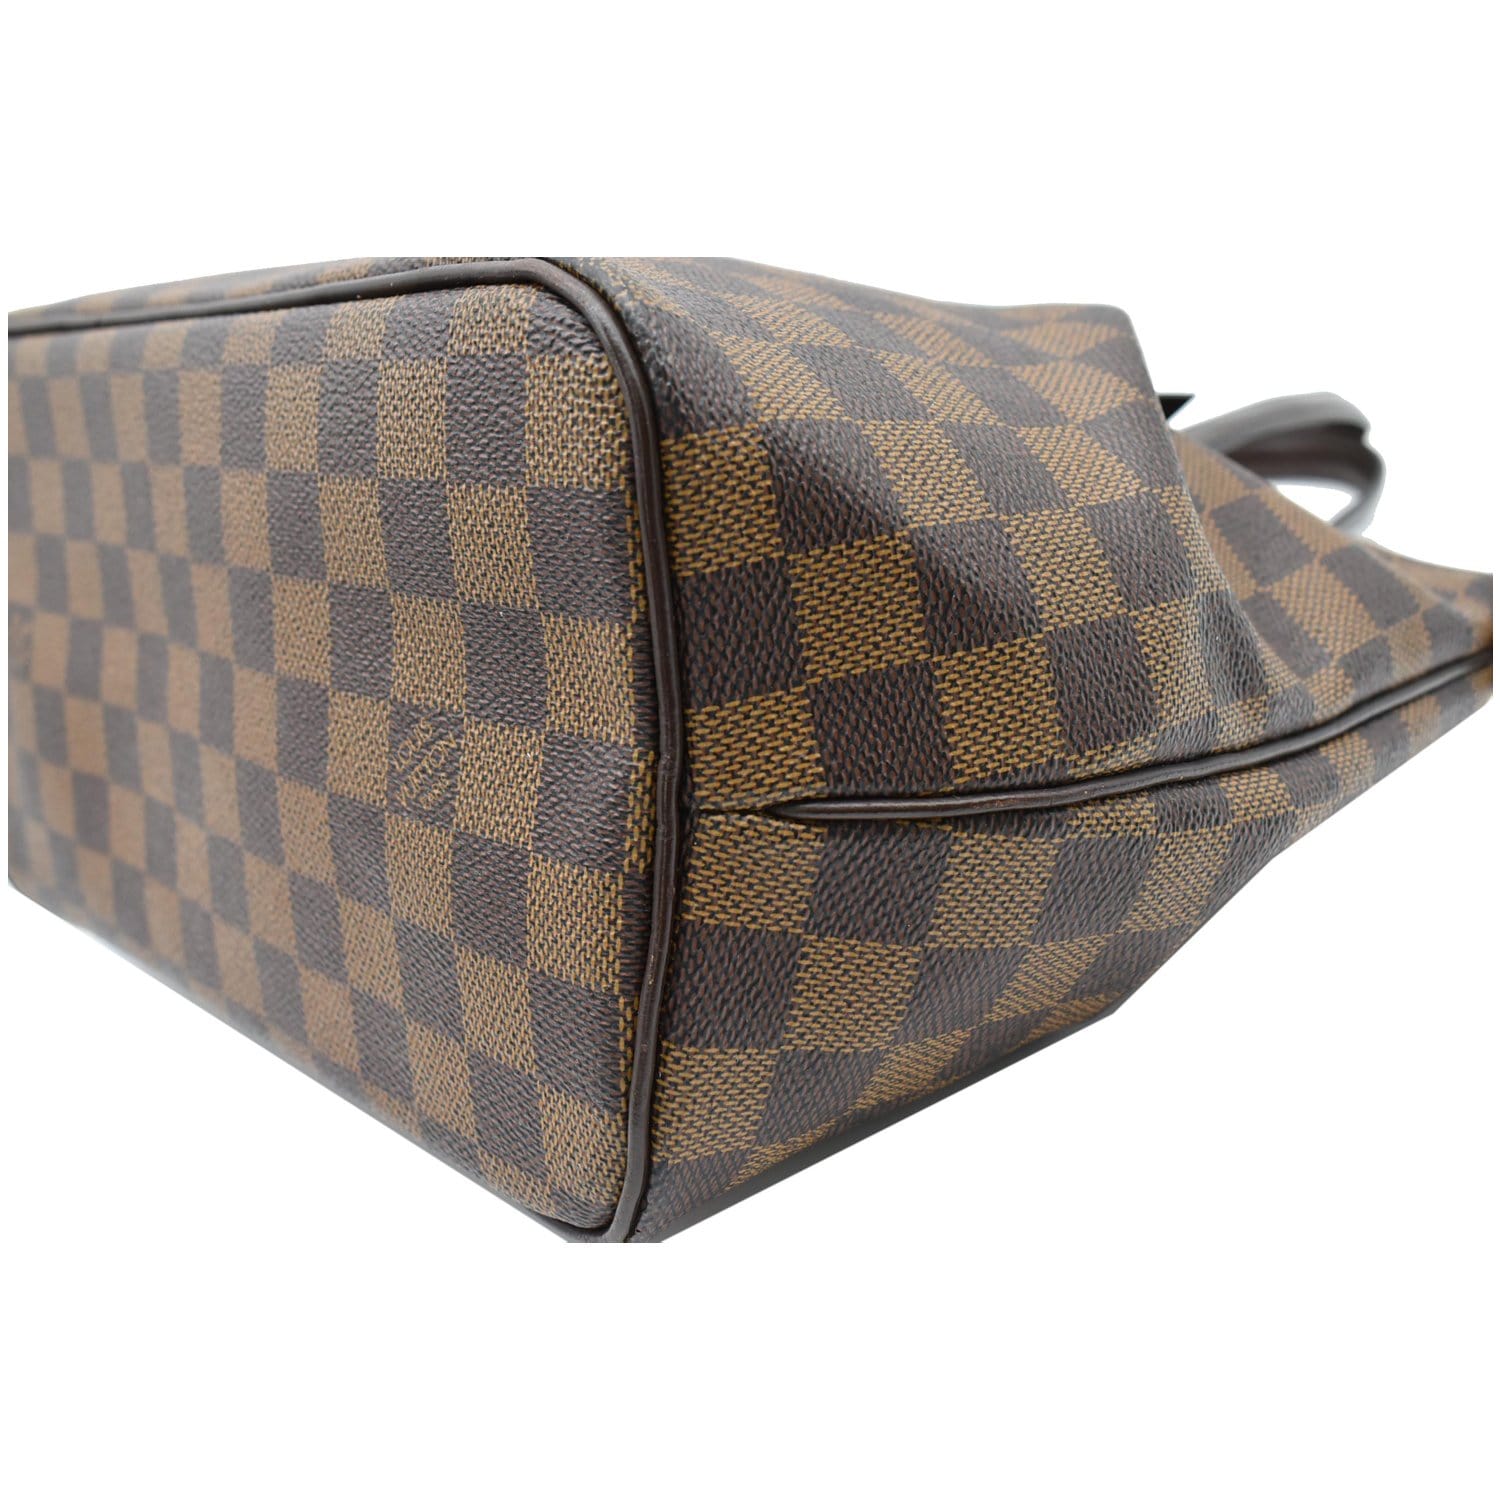 Shopbop Archive Louis Vuitton Westminster Pm Shoulder Bag In Brown